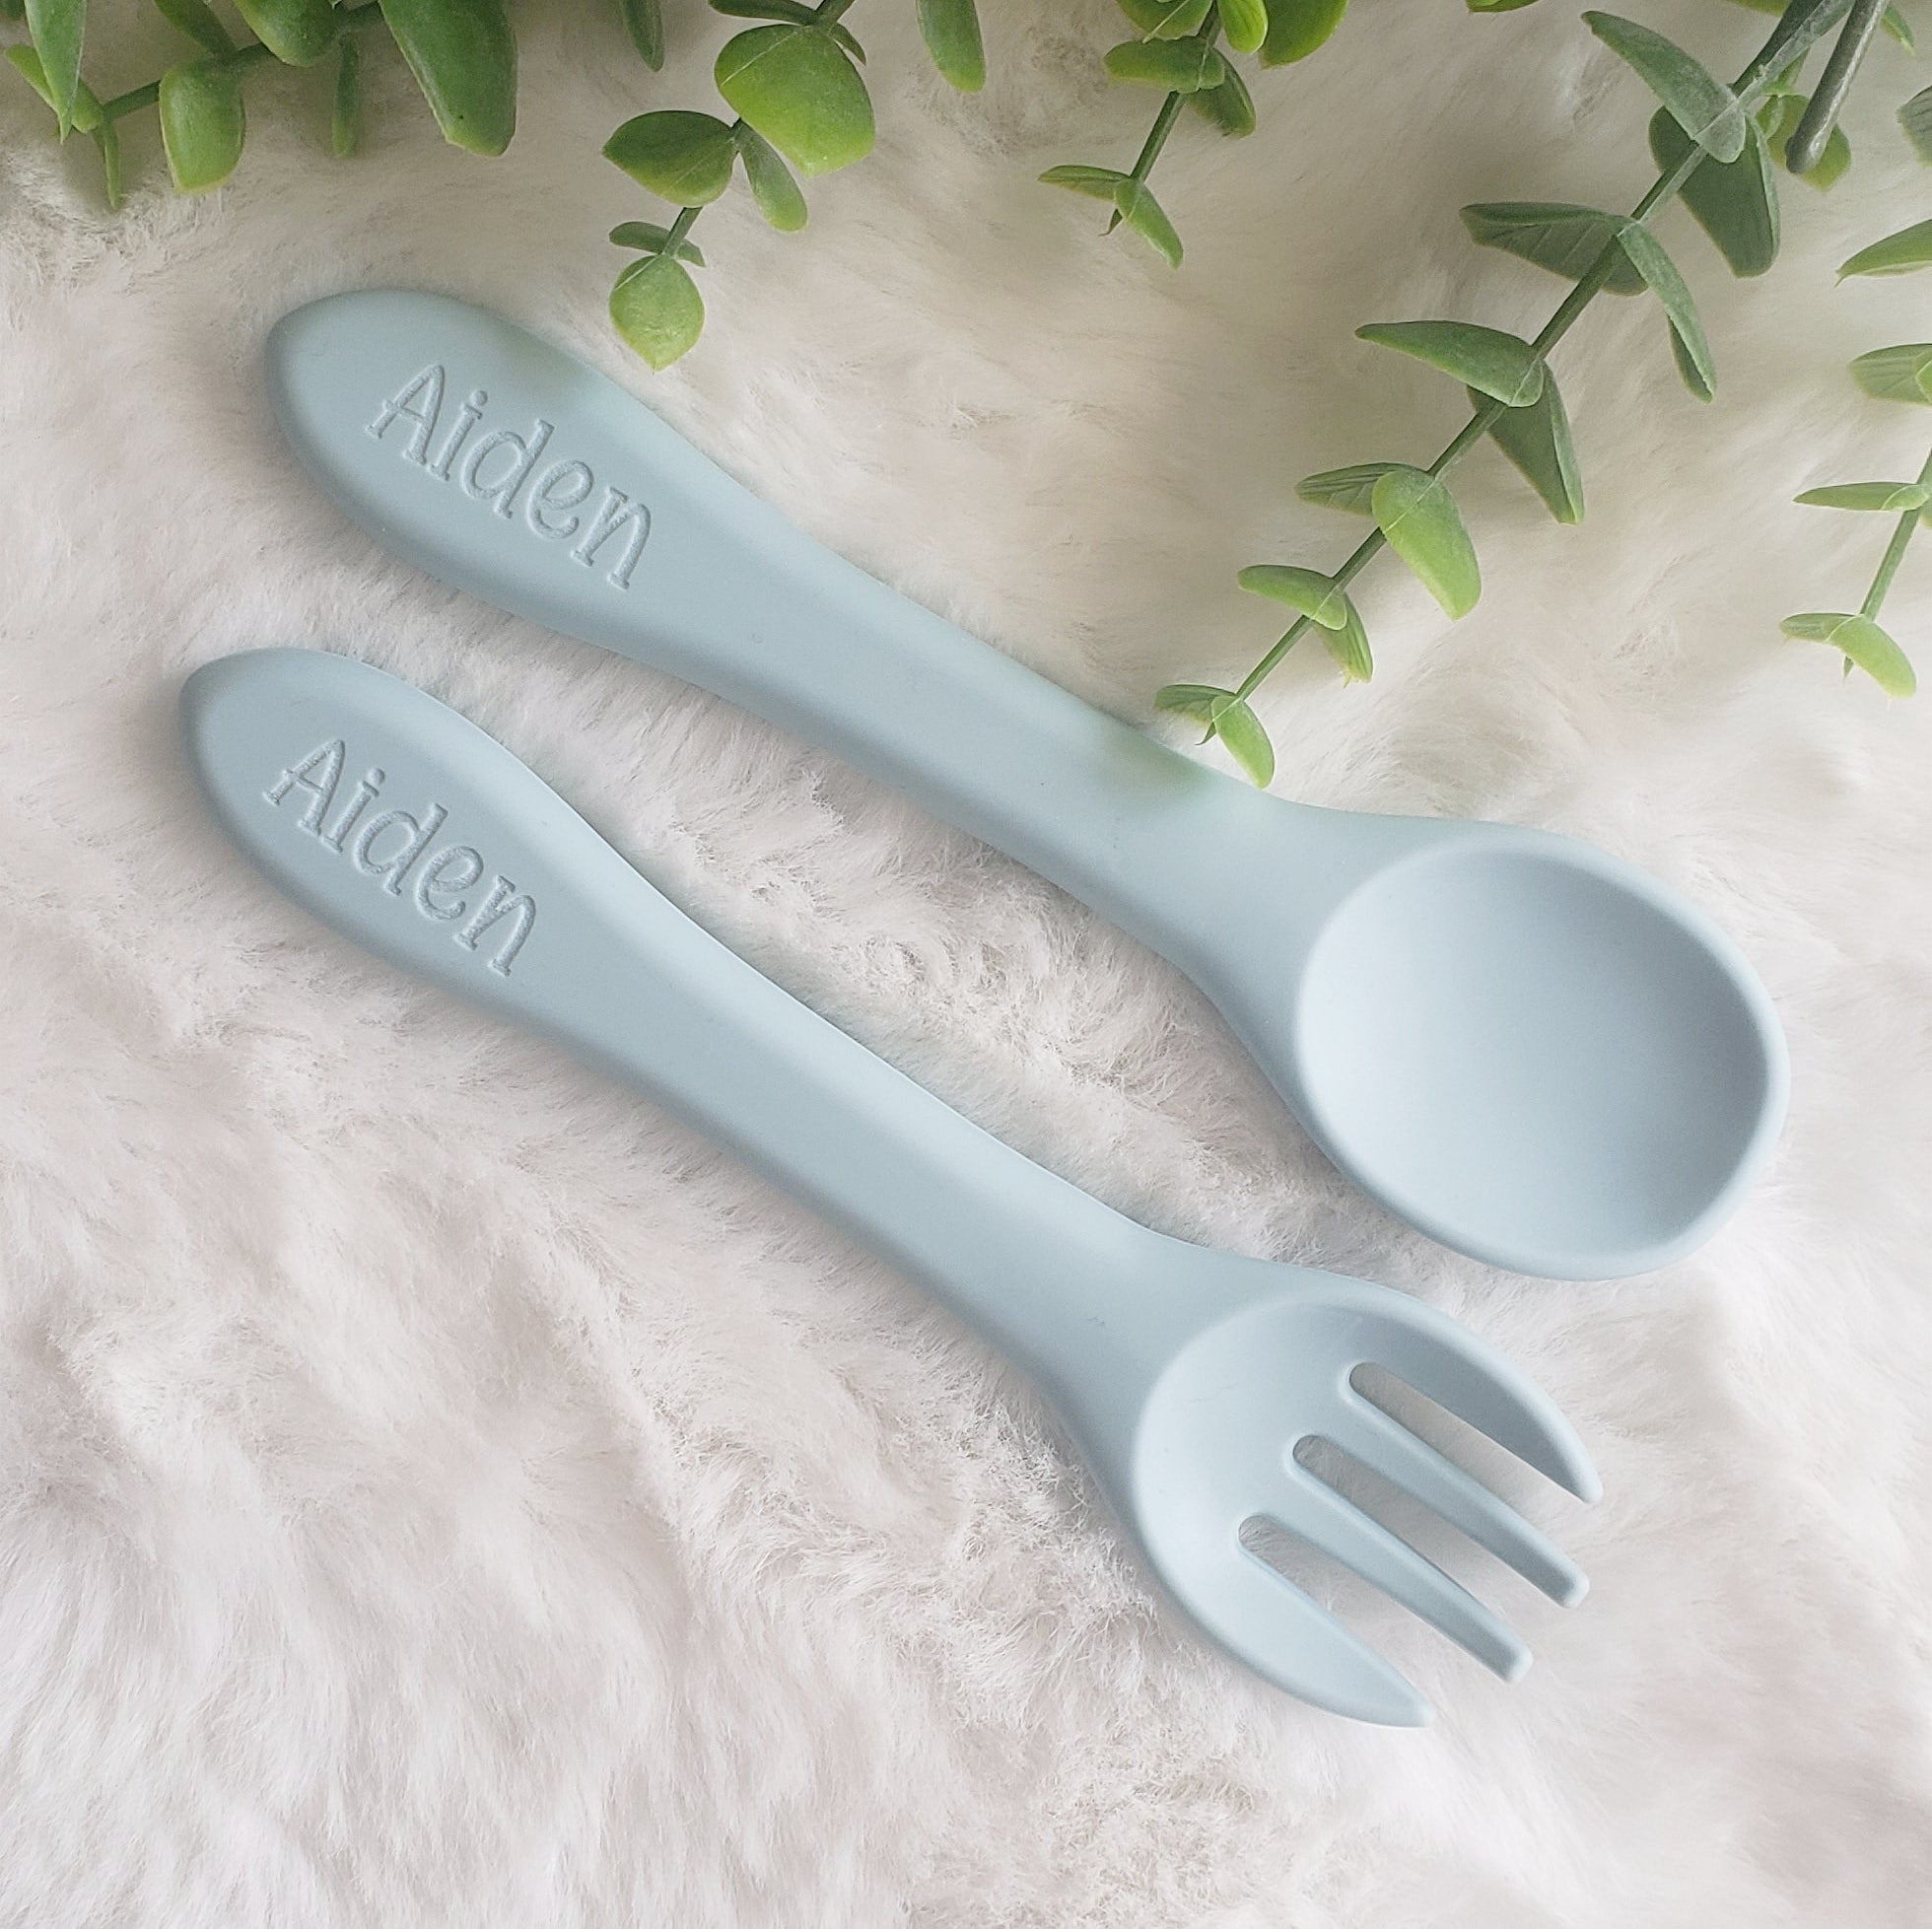 Personalized Baby Spoon Set, Monogram Baby Spoon, Custom Spoon